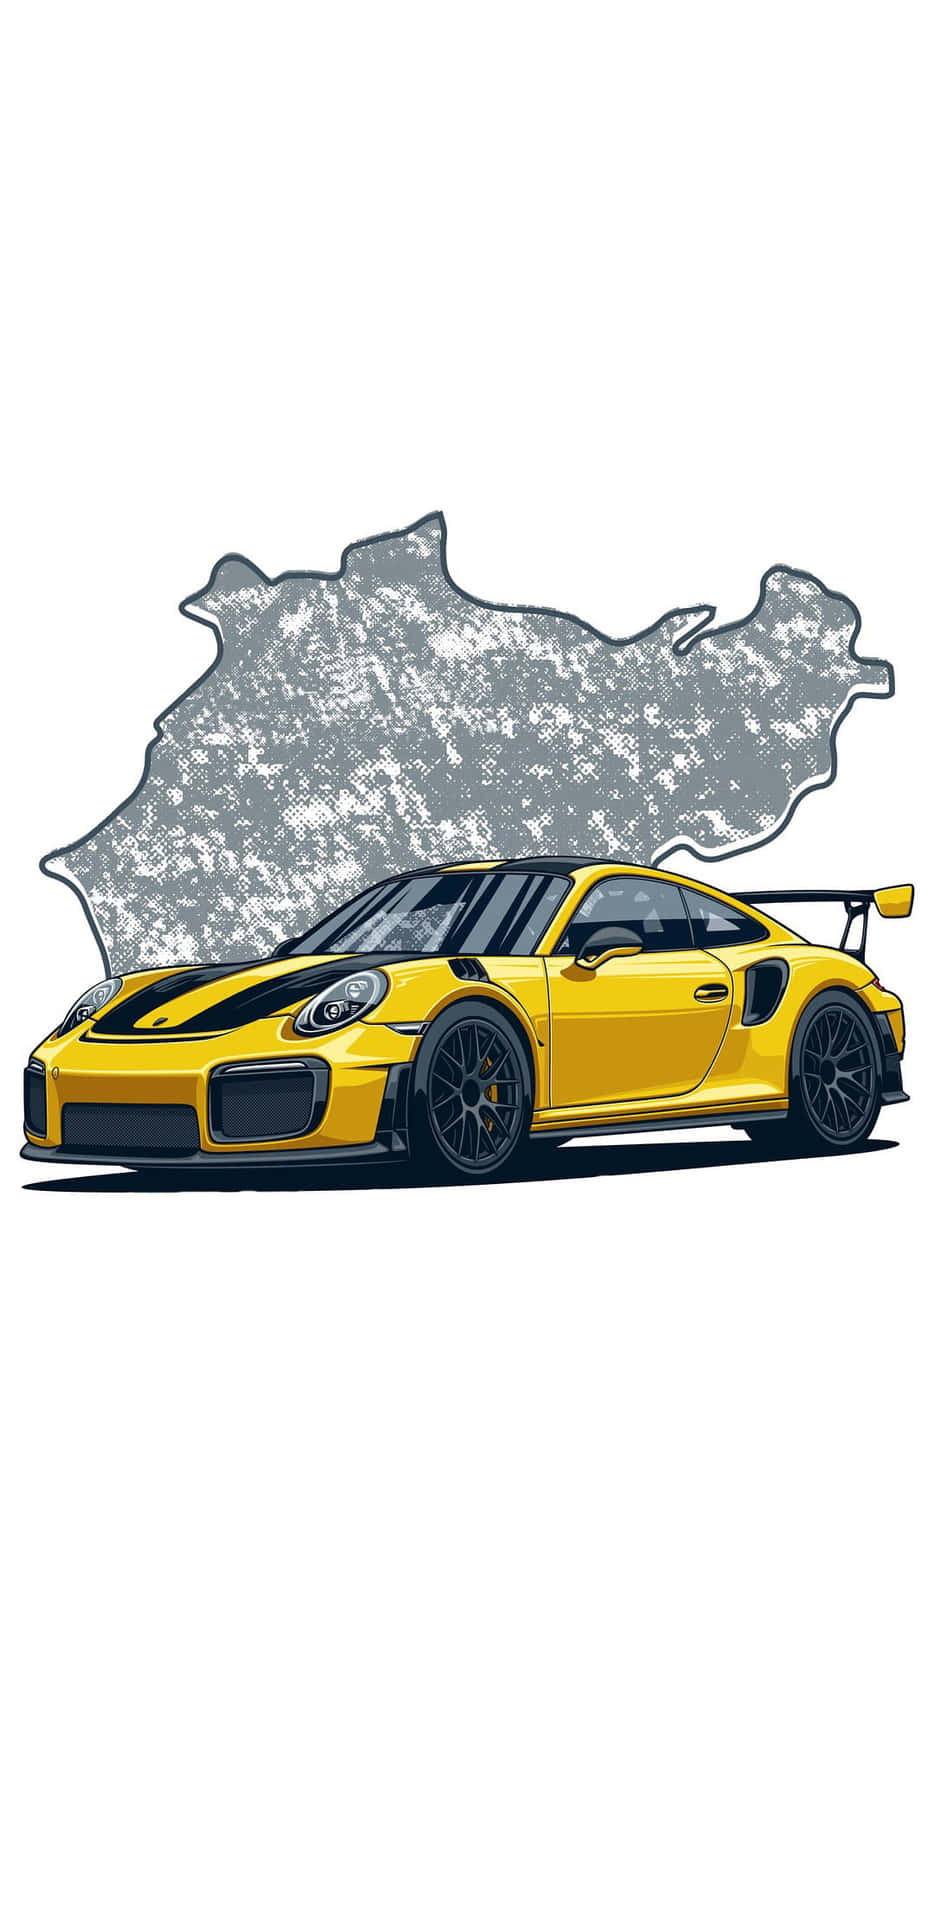 Porsche Gt3 Rs - Gt3 Rs - Porsche Gt3 Rs - Porsche Bakgrundsbild. Wallpaper